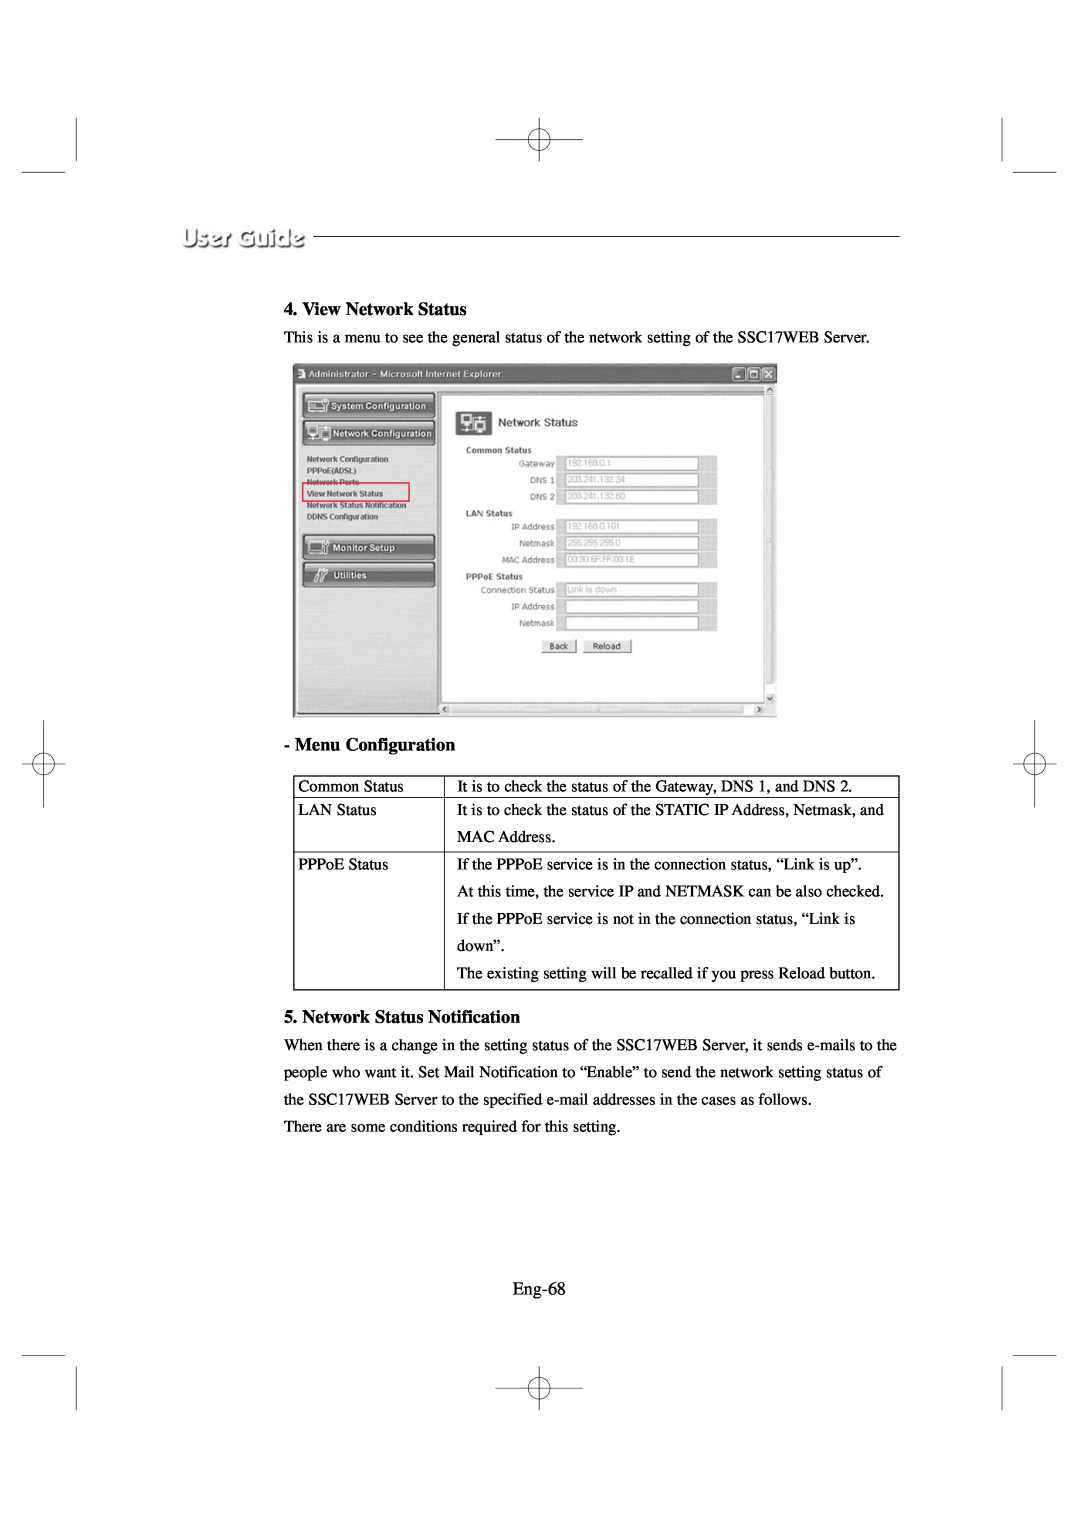 Samsung SSC17WEB manual View Network Status, Network Status Notification, Menu Configuration, Eng-68 